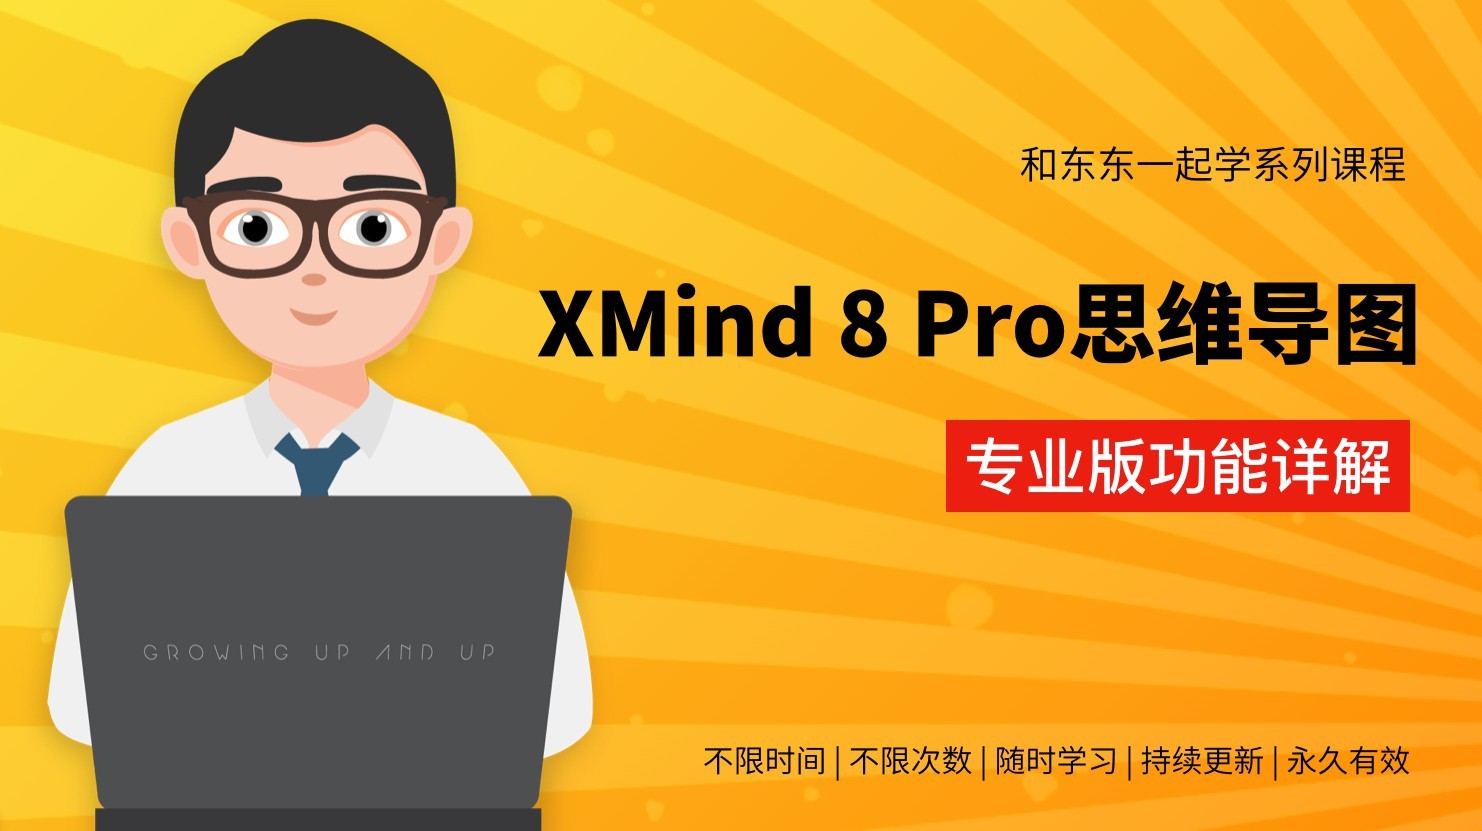 XMind 8 Pro专业版功能多面详解